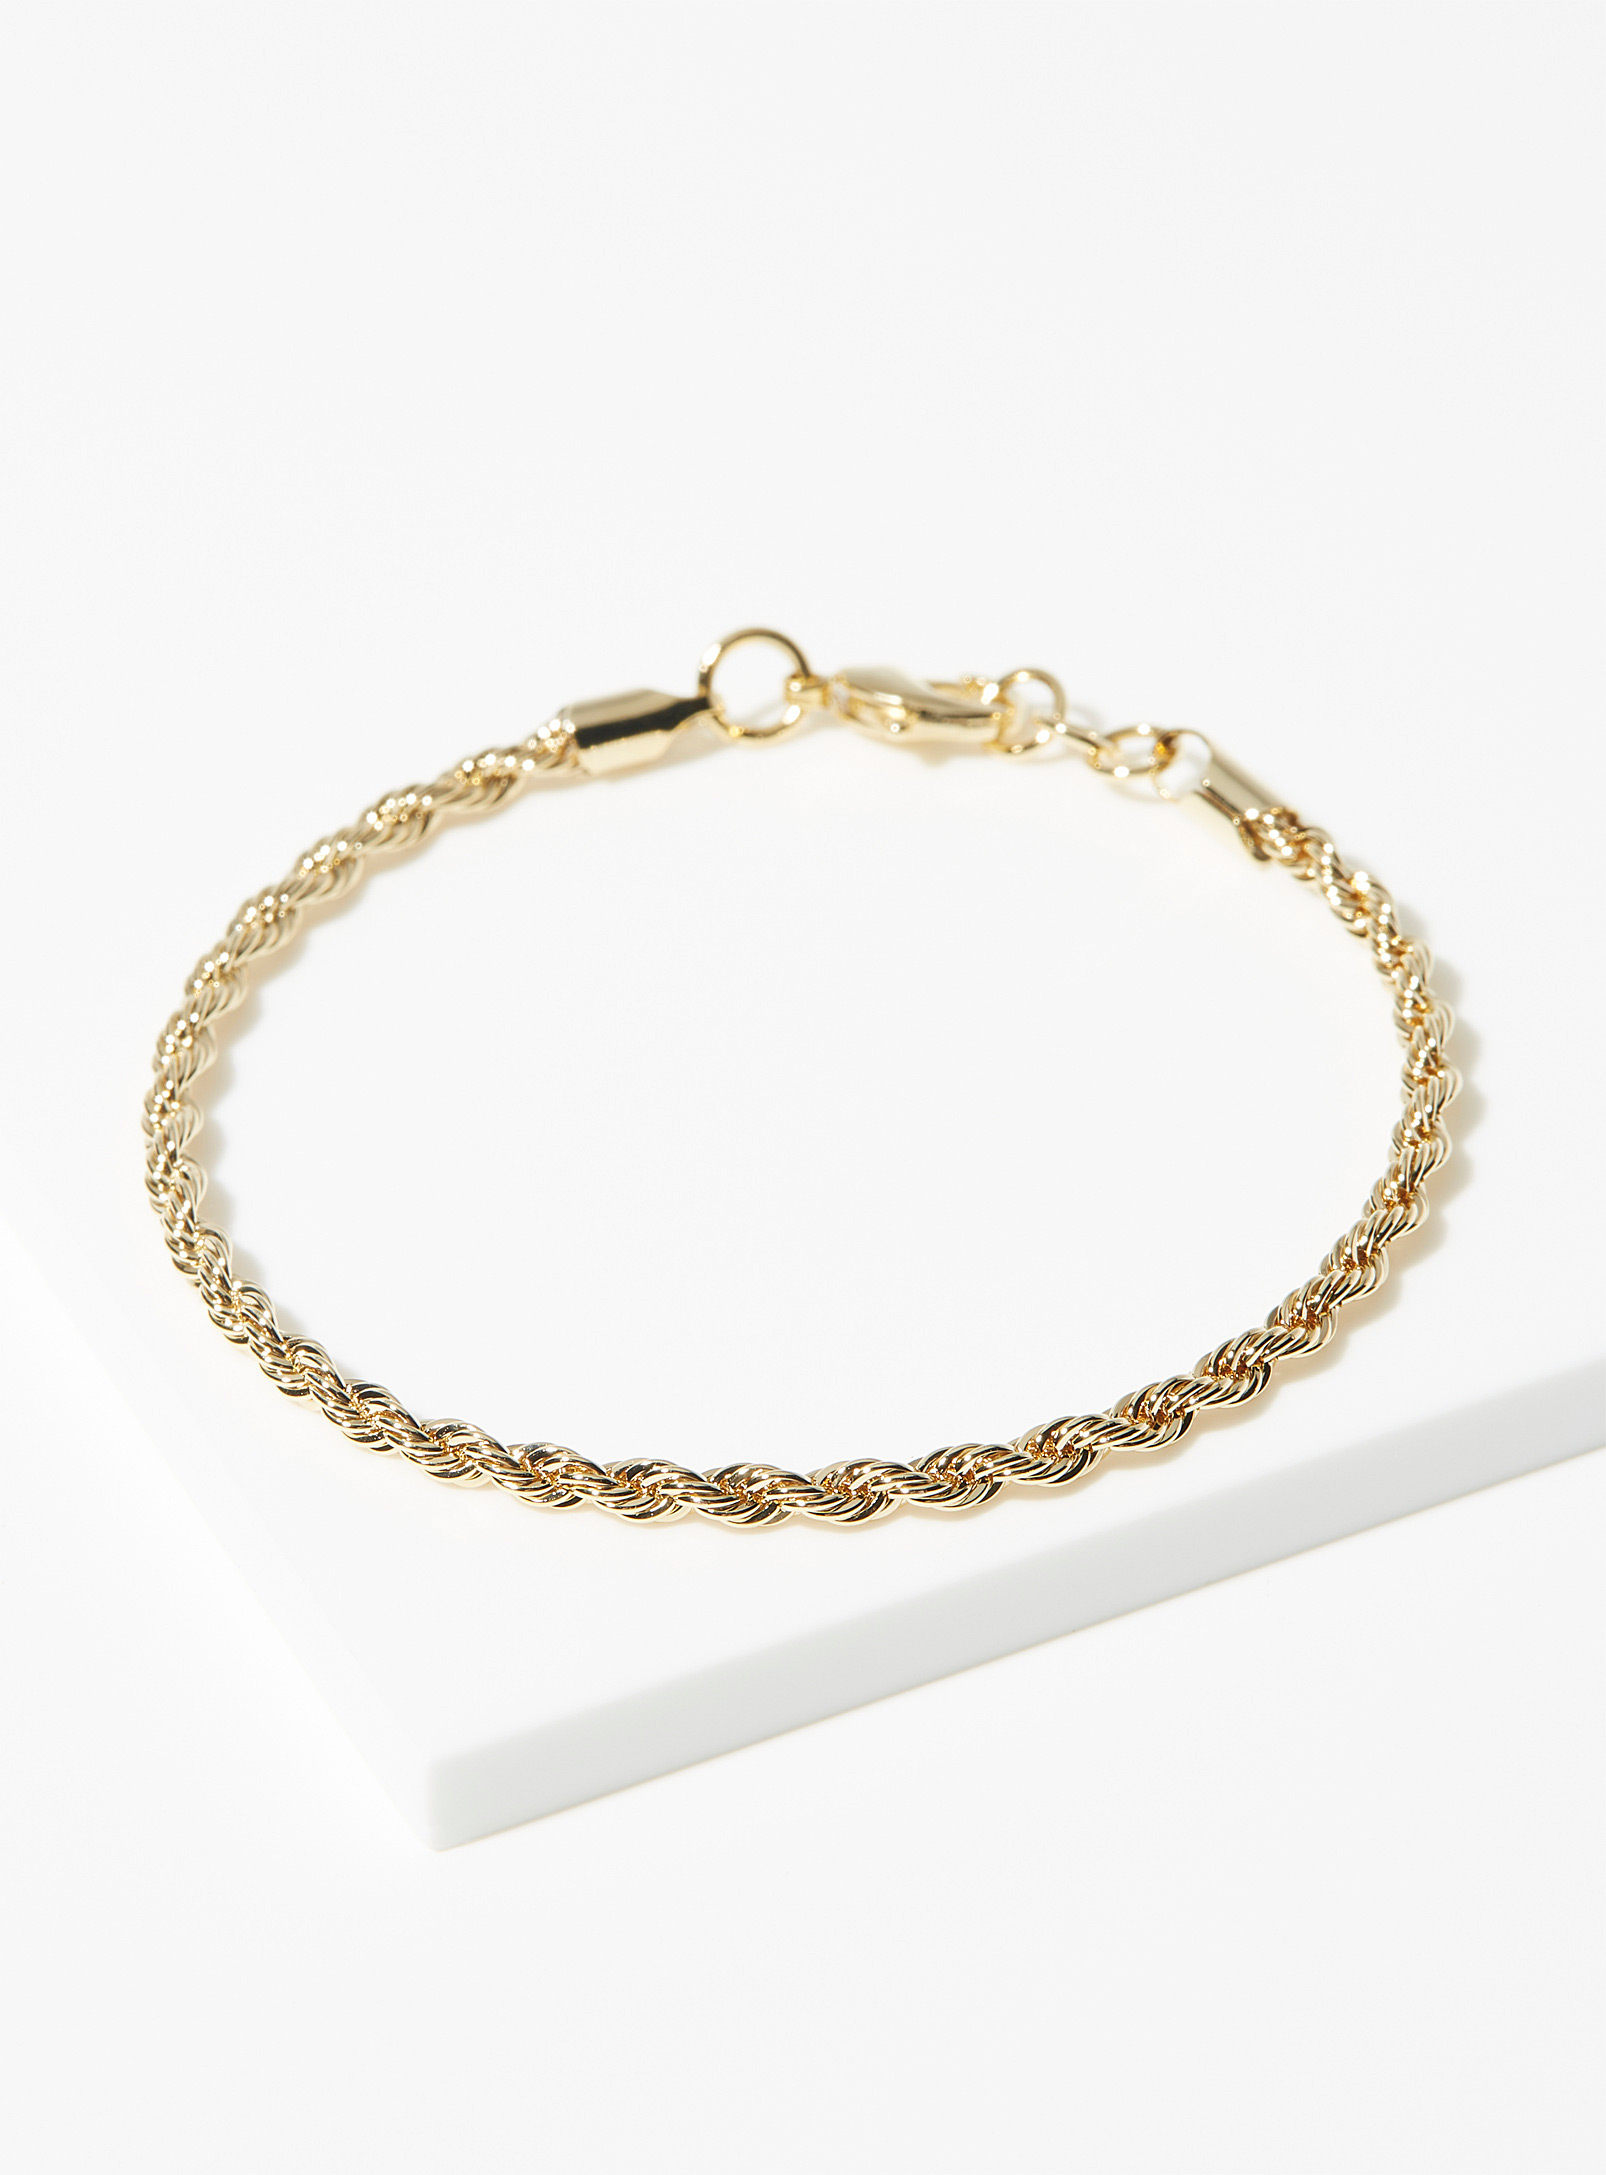 Simons - Women's Twisted bracelet